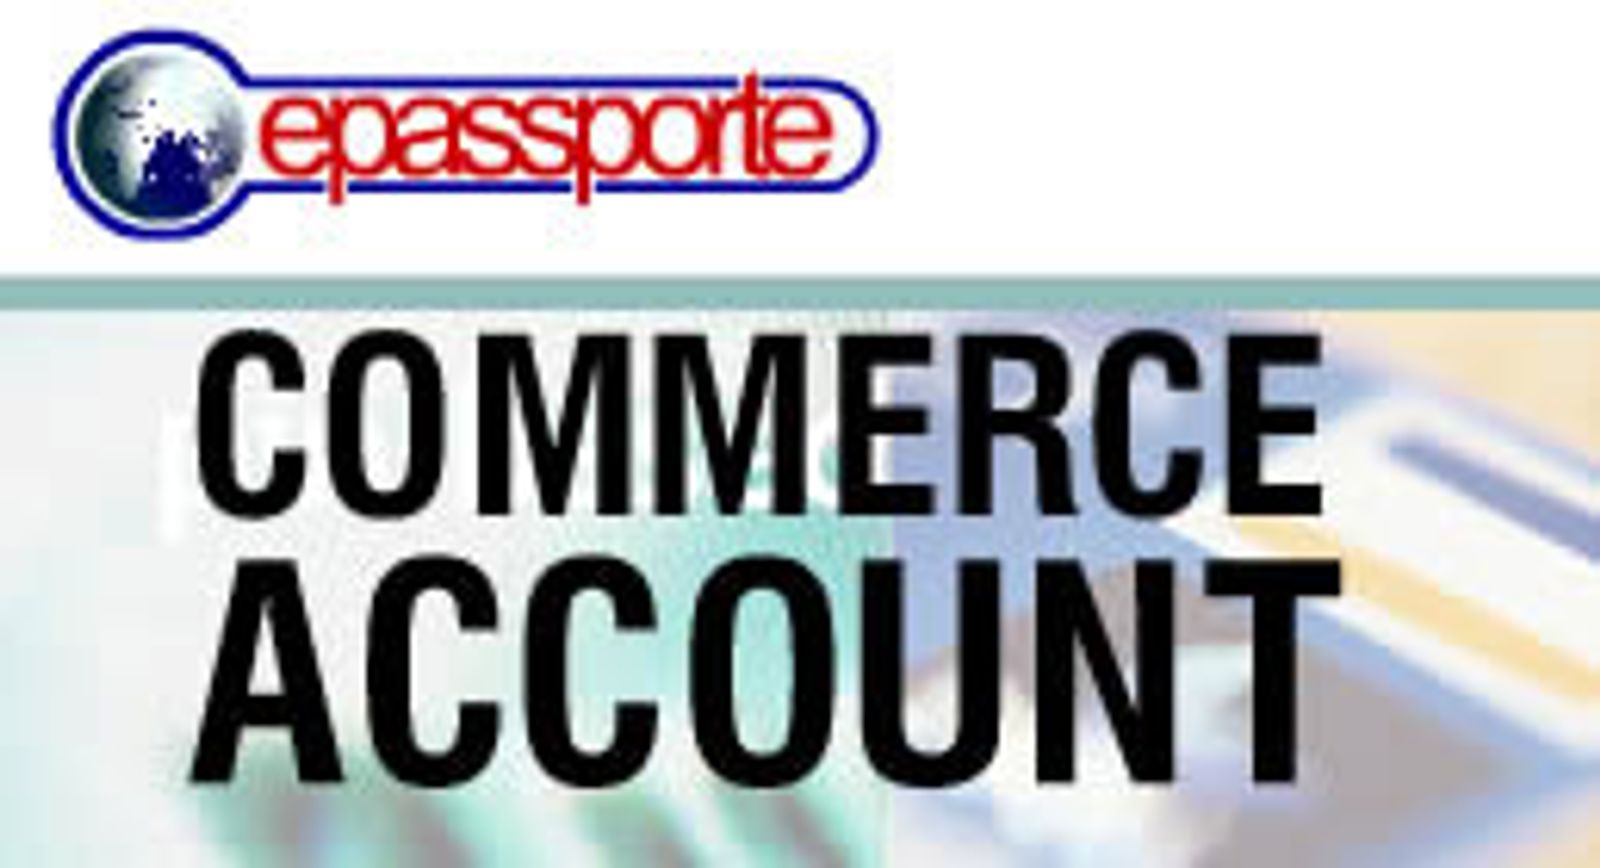 New ePassporte Commerce Account: "A PayPal Alternative"